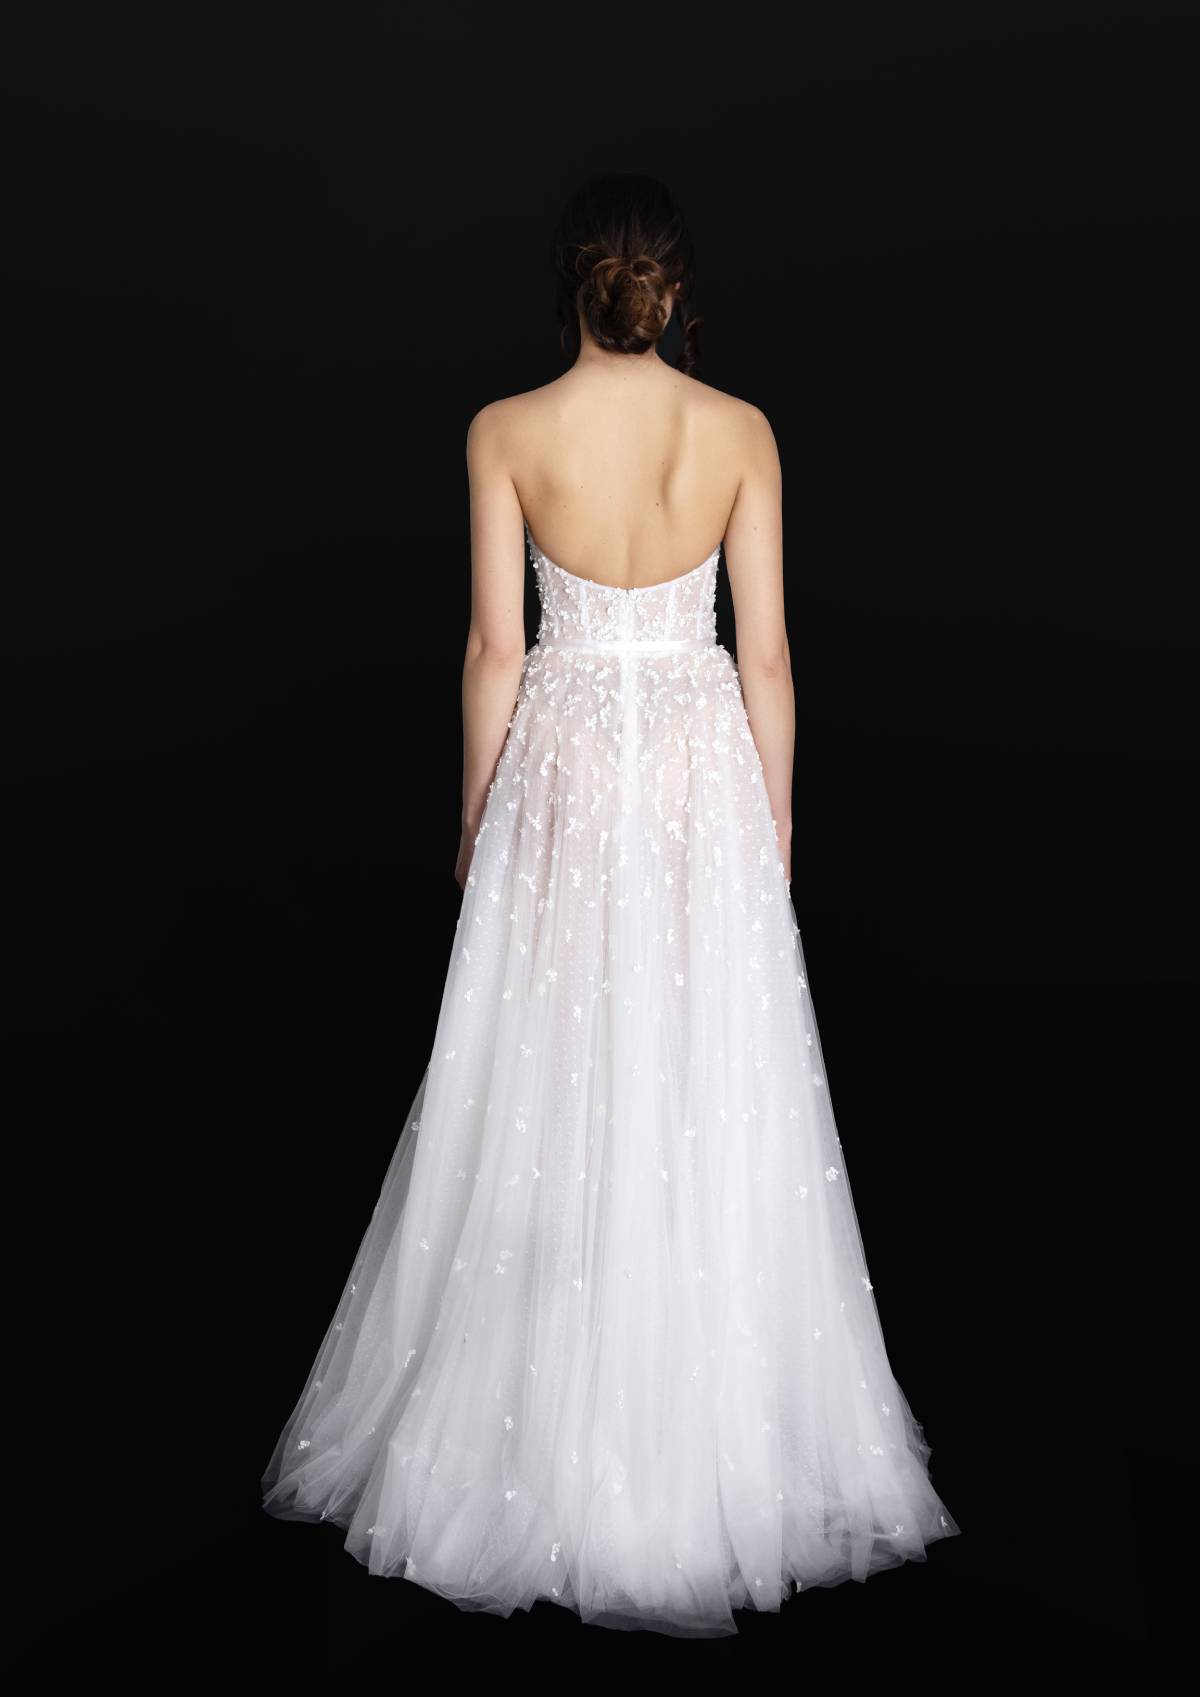 Nieve Wedding Dress - Verdin Bridal New York